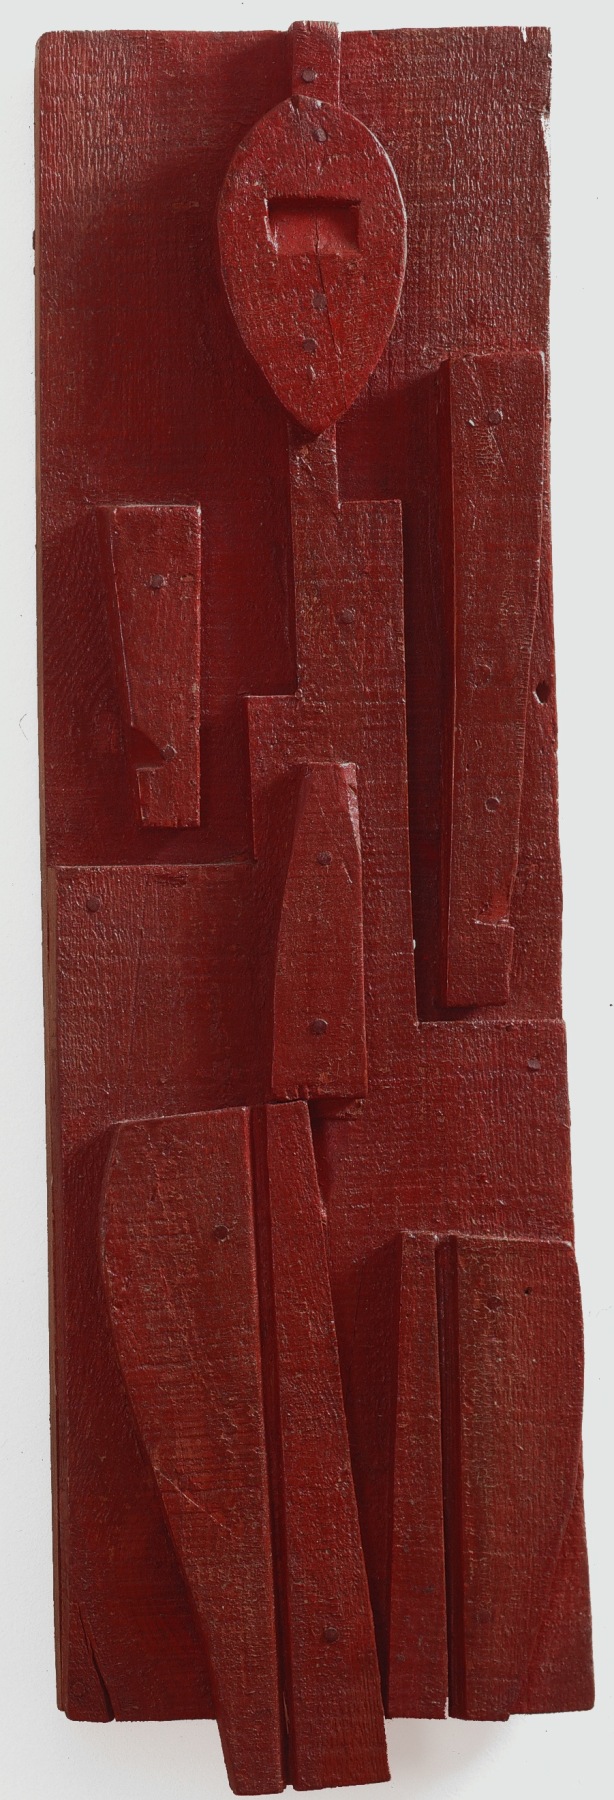 Joaqu&iacute;n Torres-Garcia,&nbsp;Tabla con hombre rojo, c. 1931,&nbsp;Oil and nails on wood,&nbsp;17 1/2 x 6 in. (44.5 x 15.2 cm.)